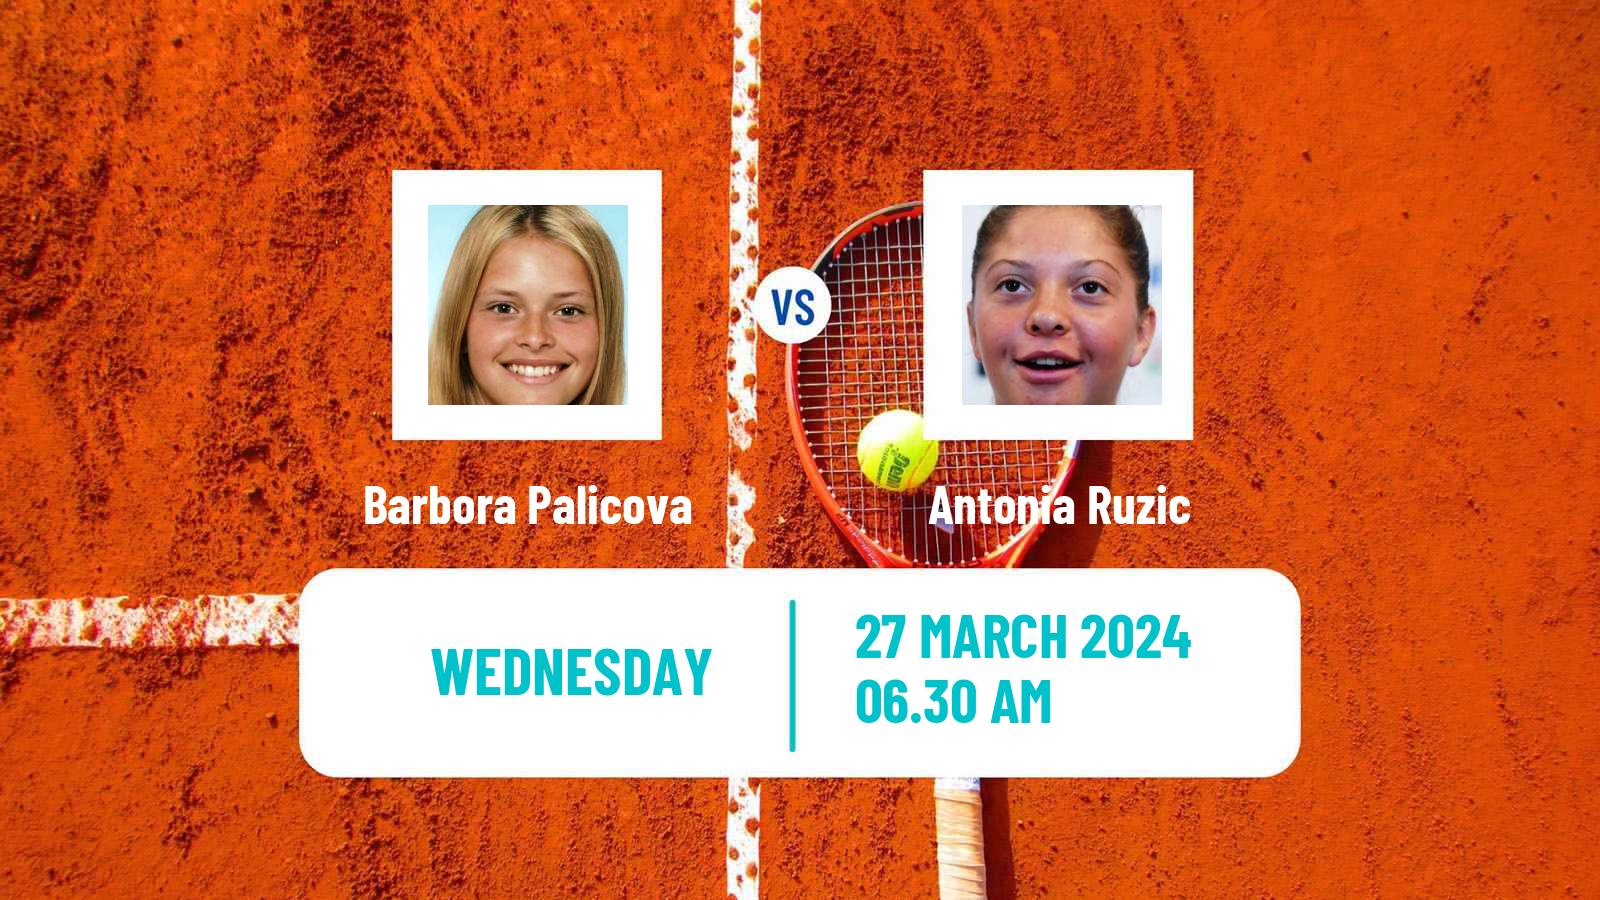 Tennis ITF W50 Murska Sobota Women Barbora Palicova - Antonia Ruzic